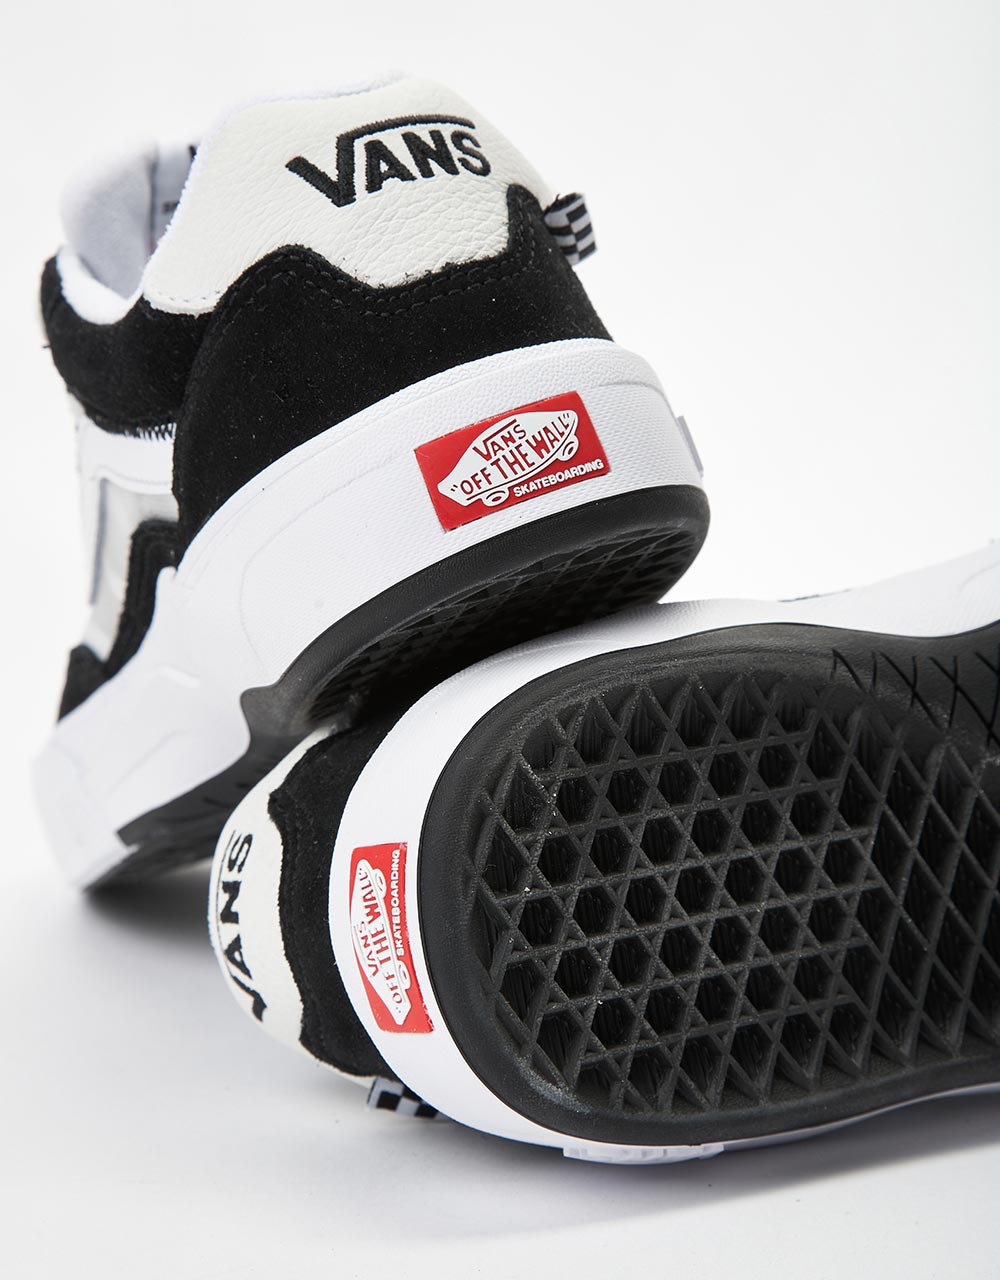 Vans Skate Wayvee Skate Shoes - Black/True White